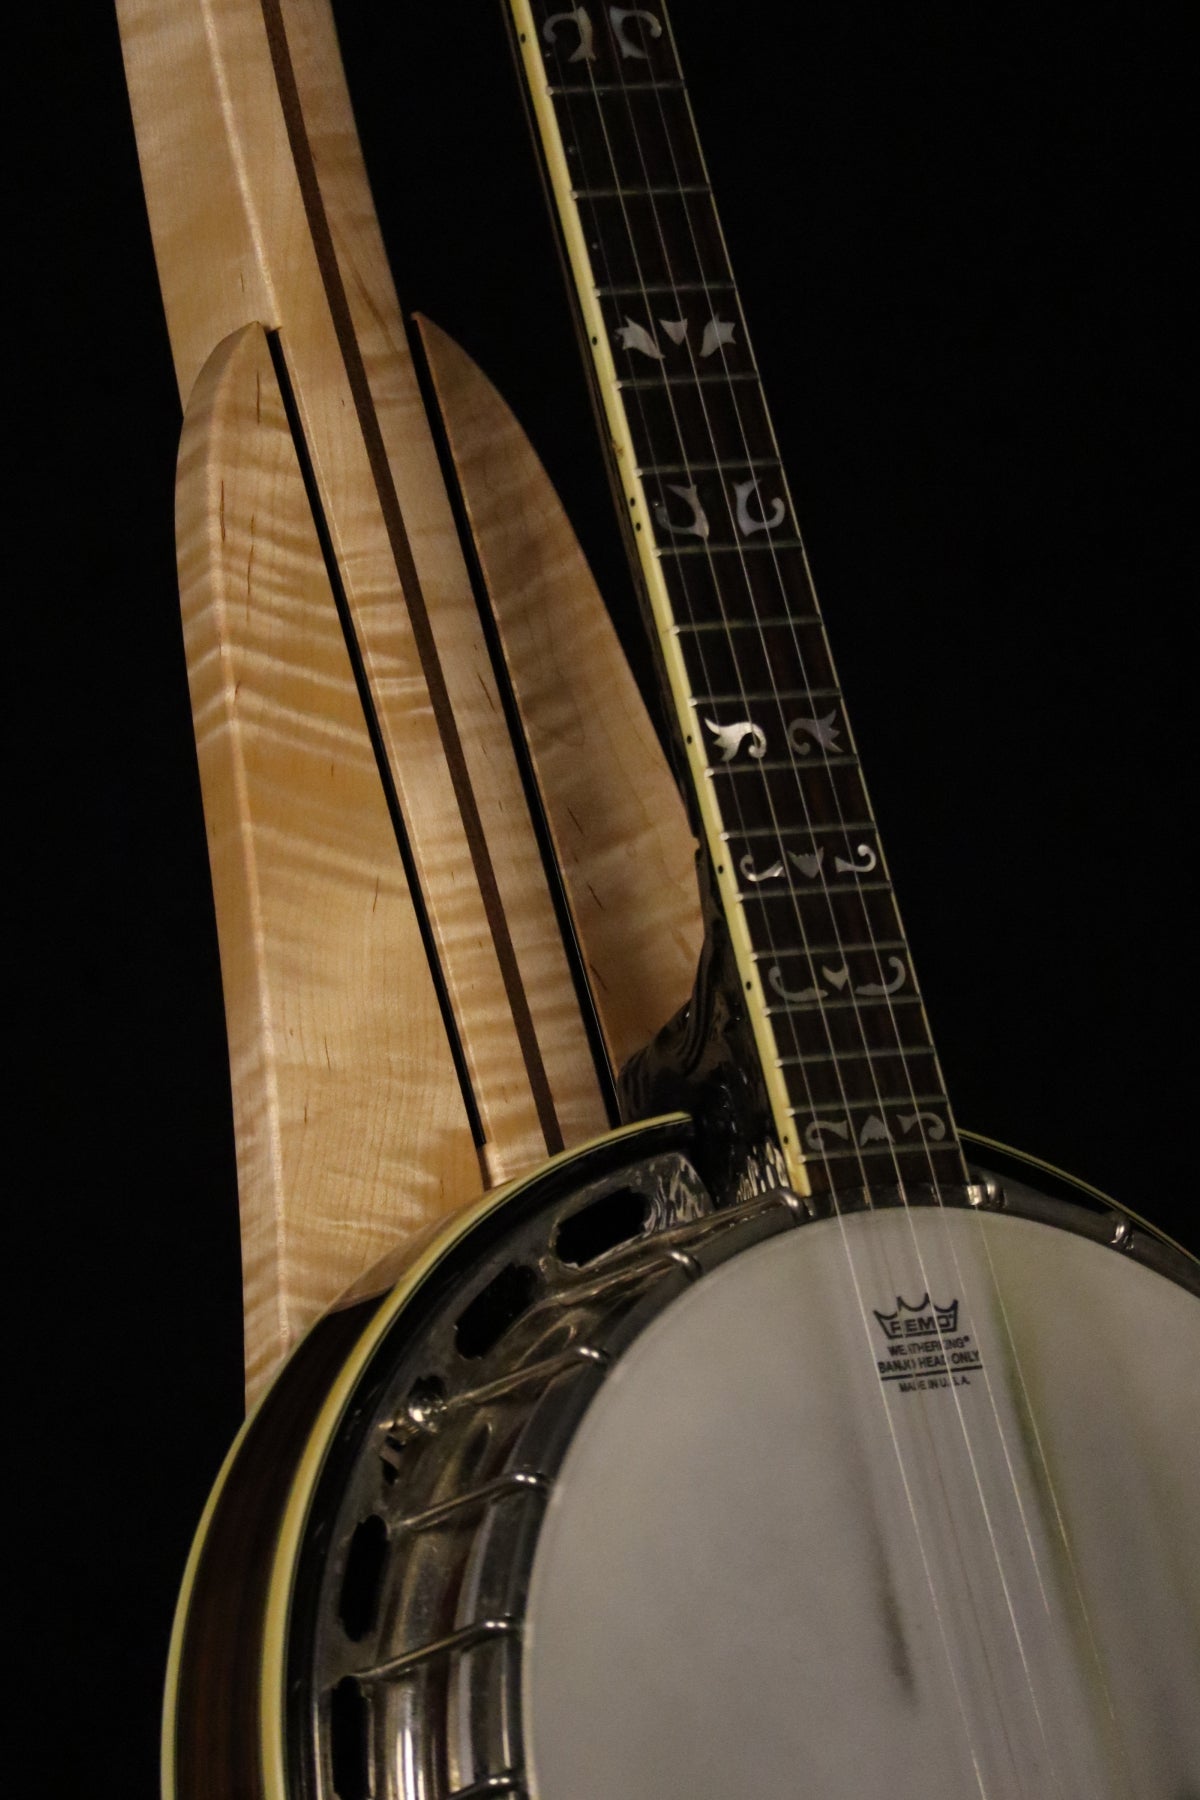 Folding curly maple and walnut wood banjo floor stand closeup front image with Alvarez banjo